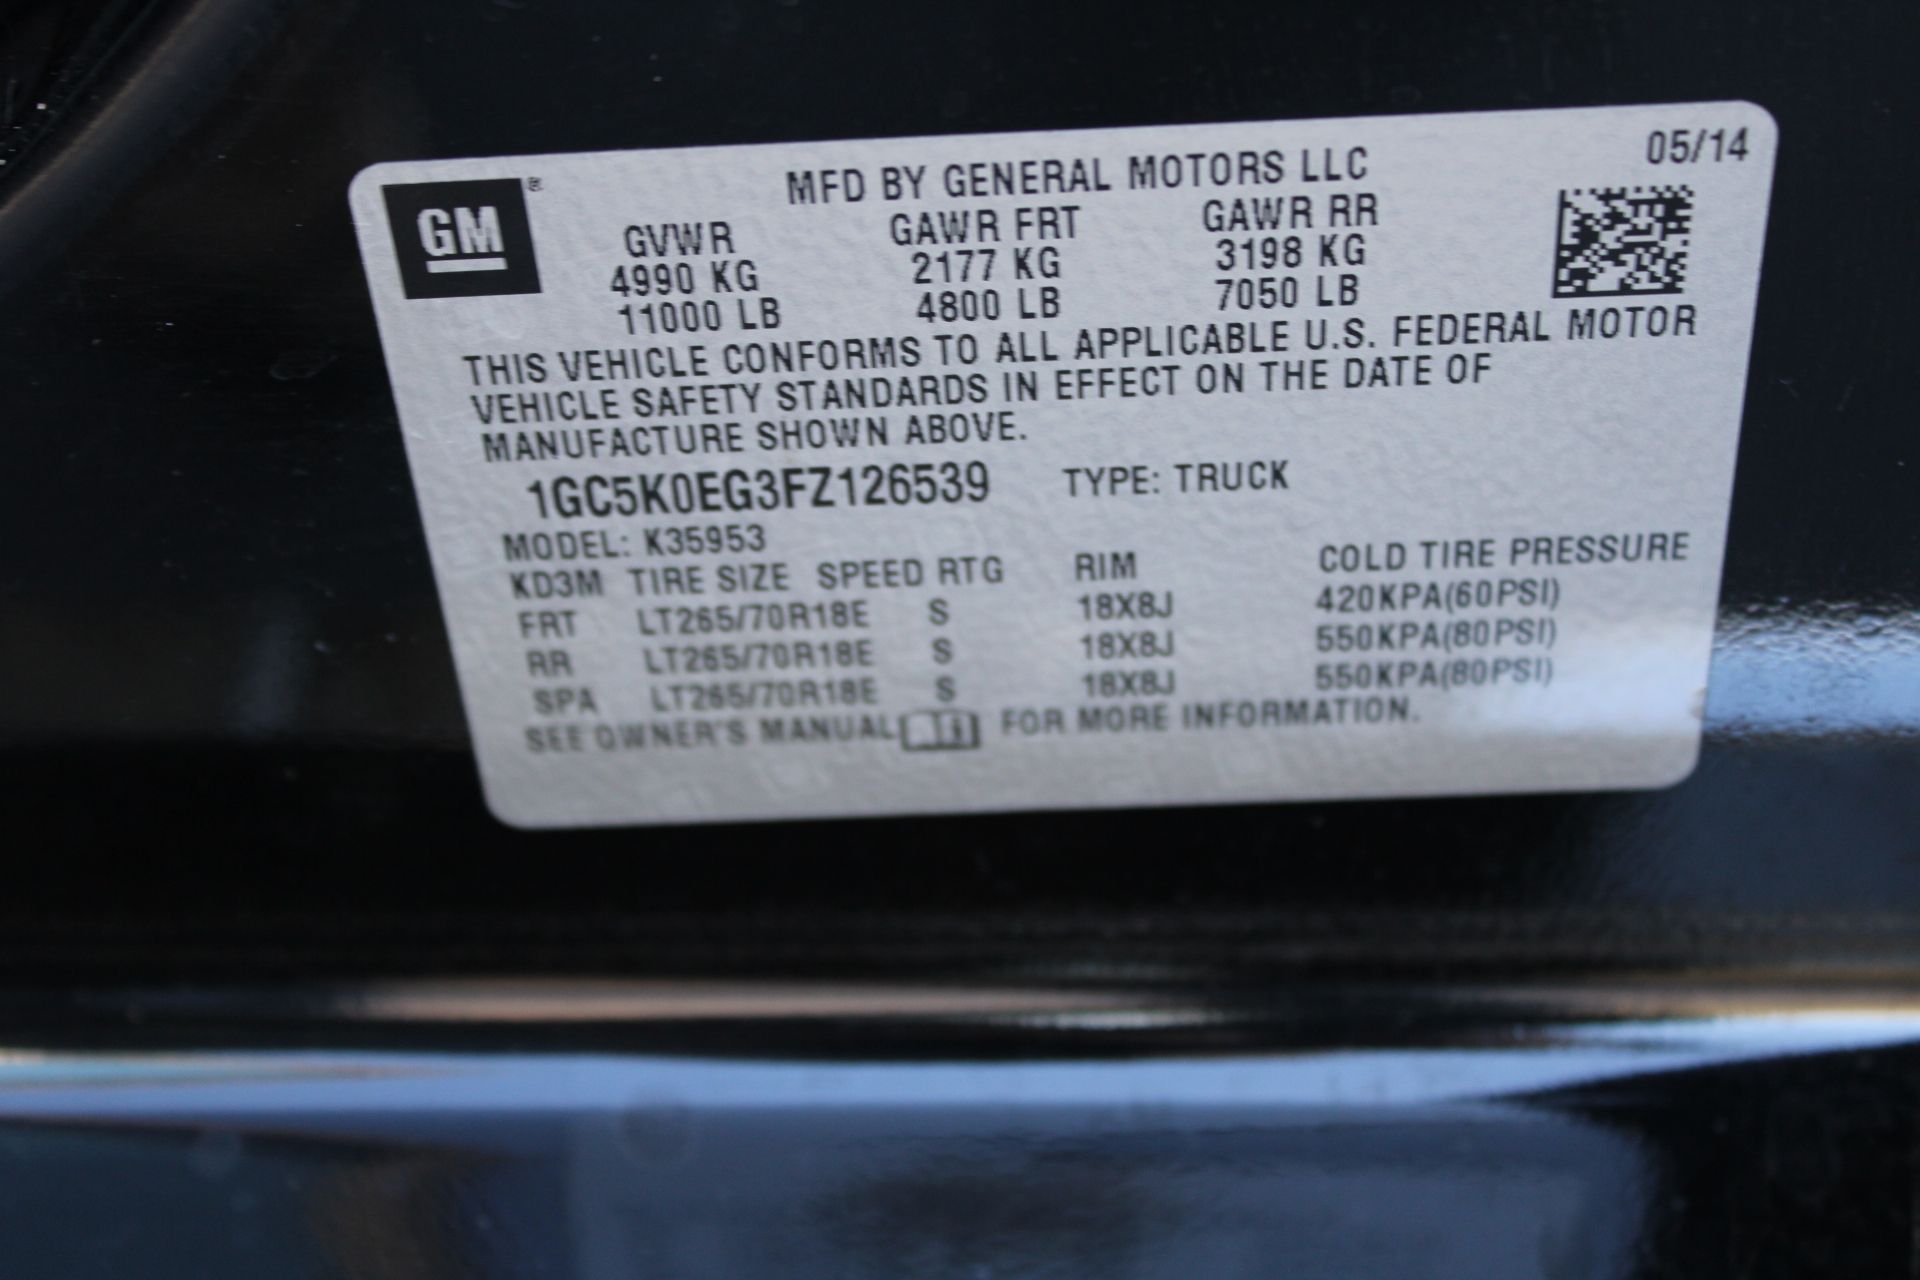 2015 Chevrolet Model Silverado 3500 LTZ Pick-Up Truck, VIN: 1GC5K0EG3FZ126539, Automatic Transmissi - Image 10 of 15